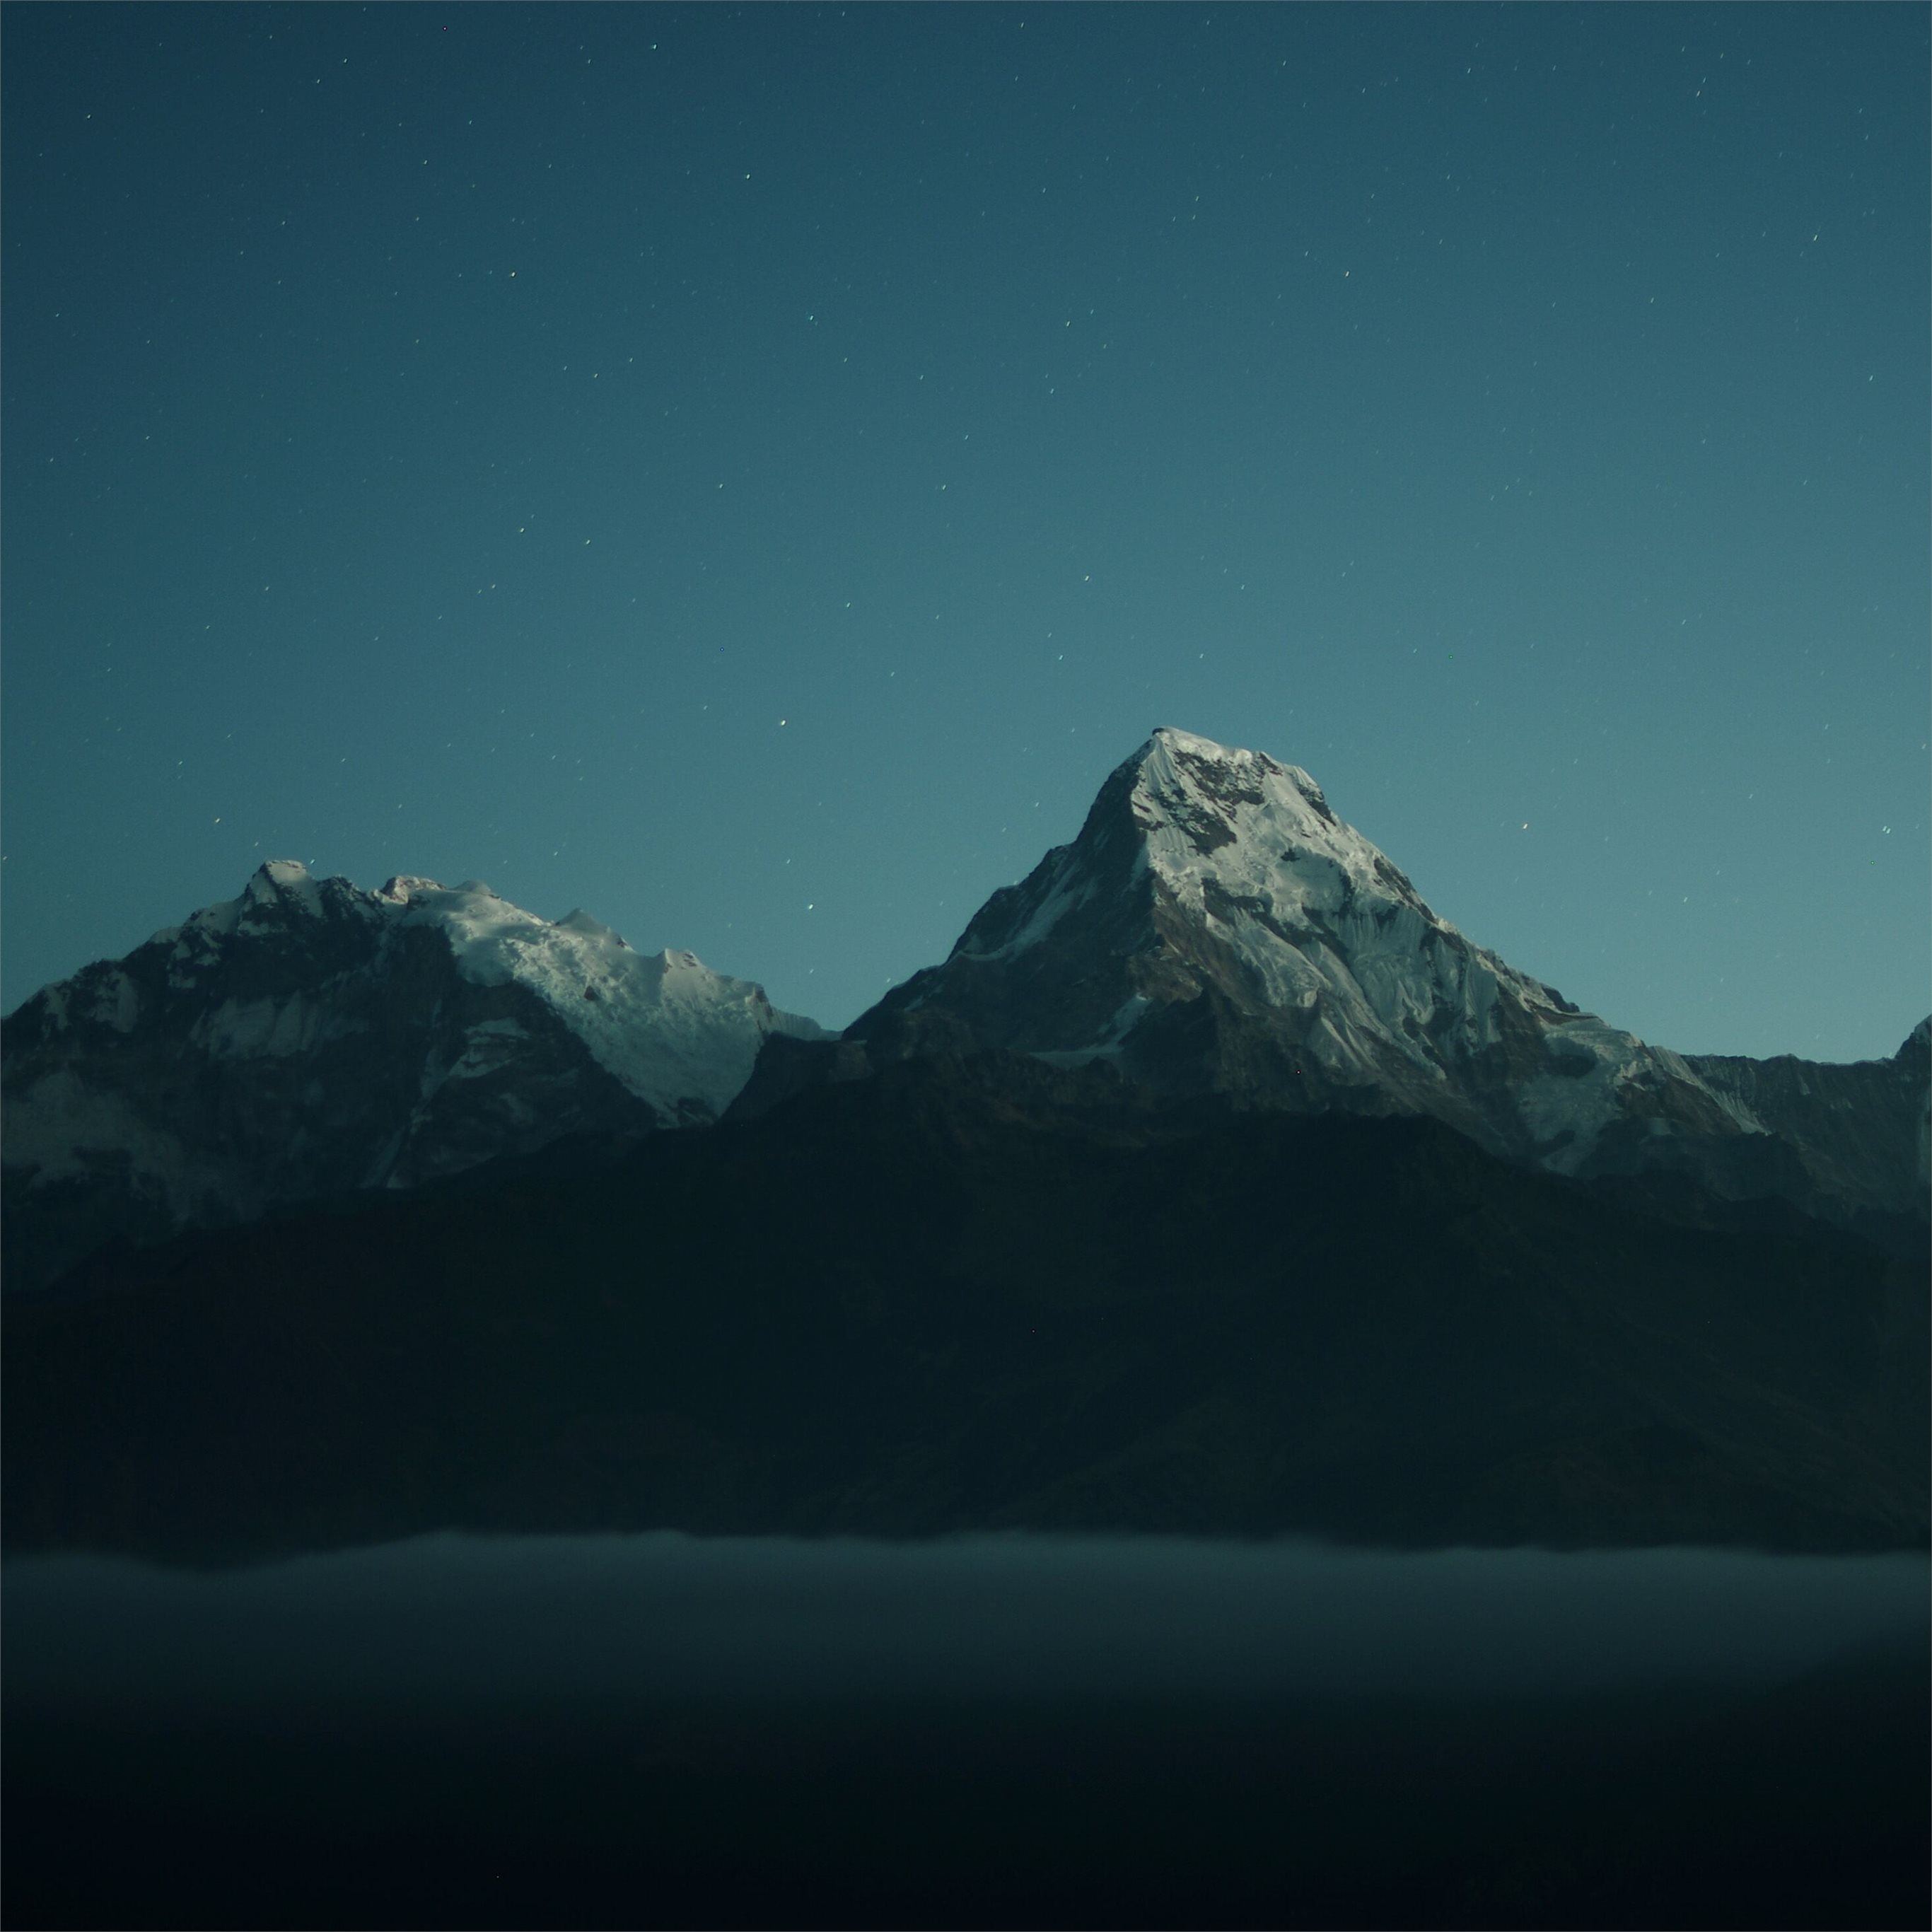 dusk mountains 4k iPad Pro Wallpaper Free Download